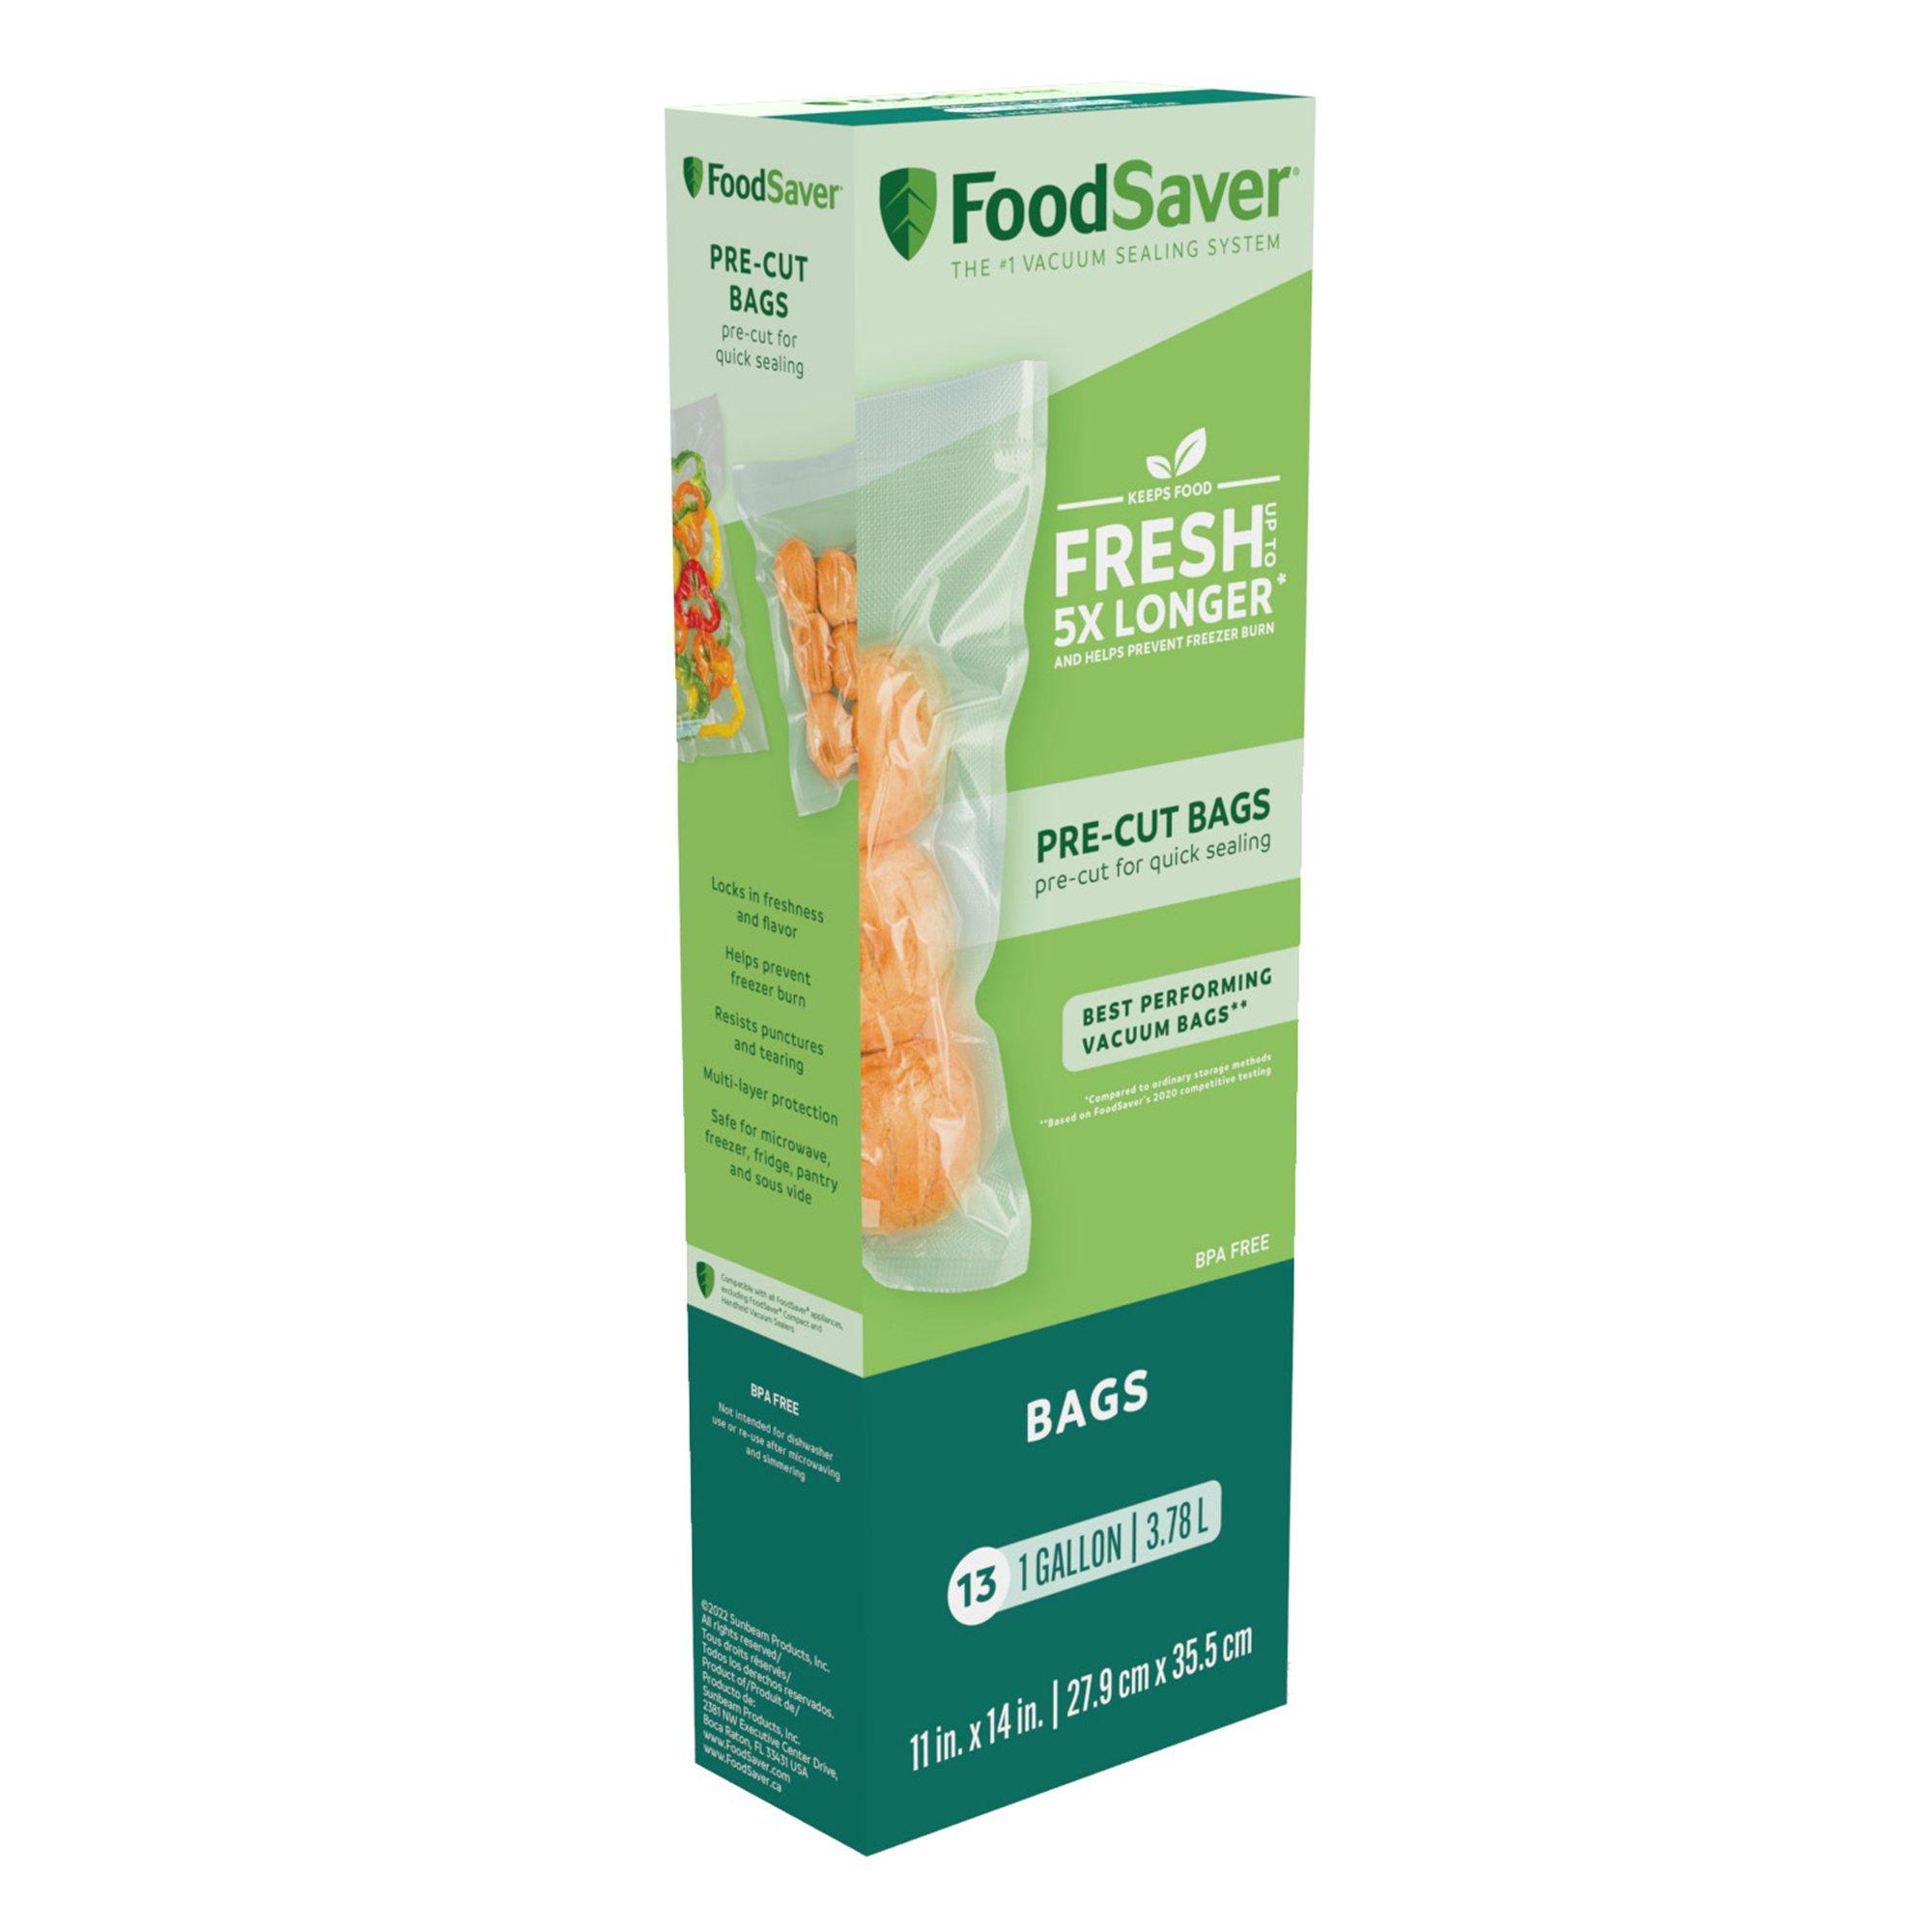 Food Saver 13-Count Gallon Size Vacuum-seal Precut Bags